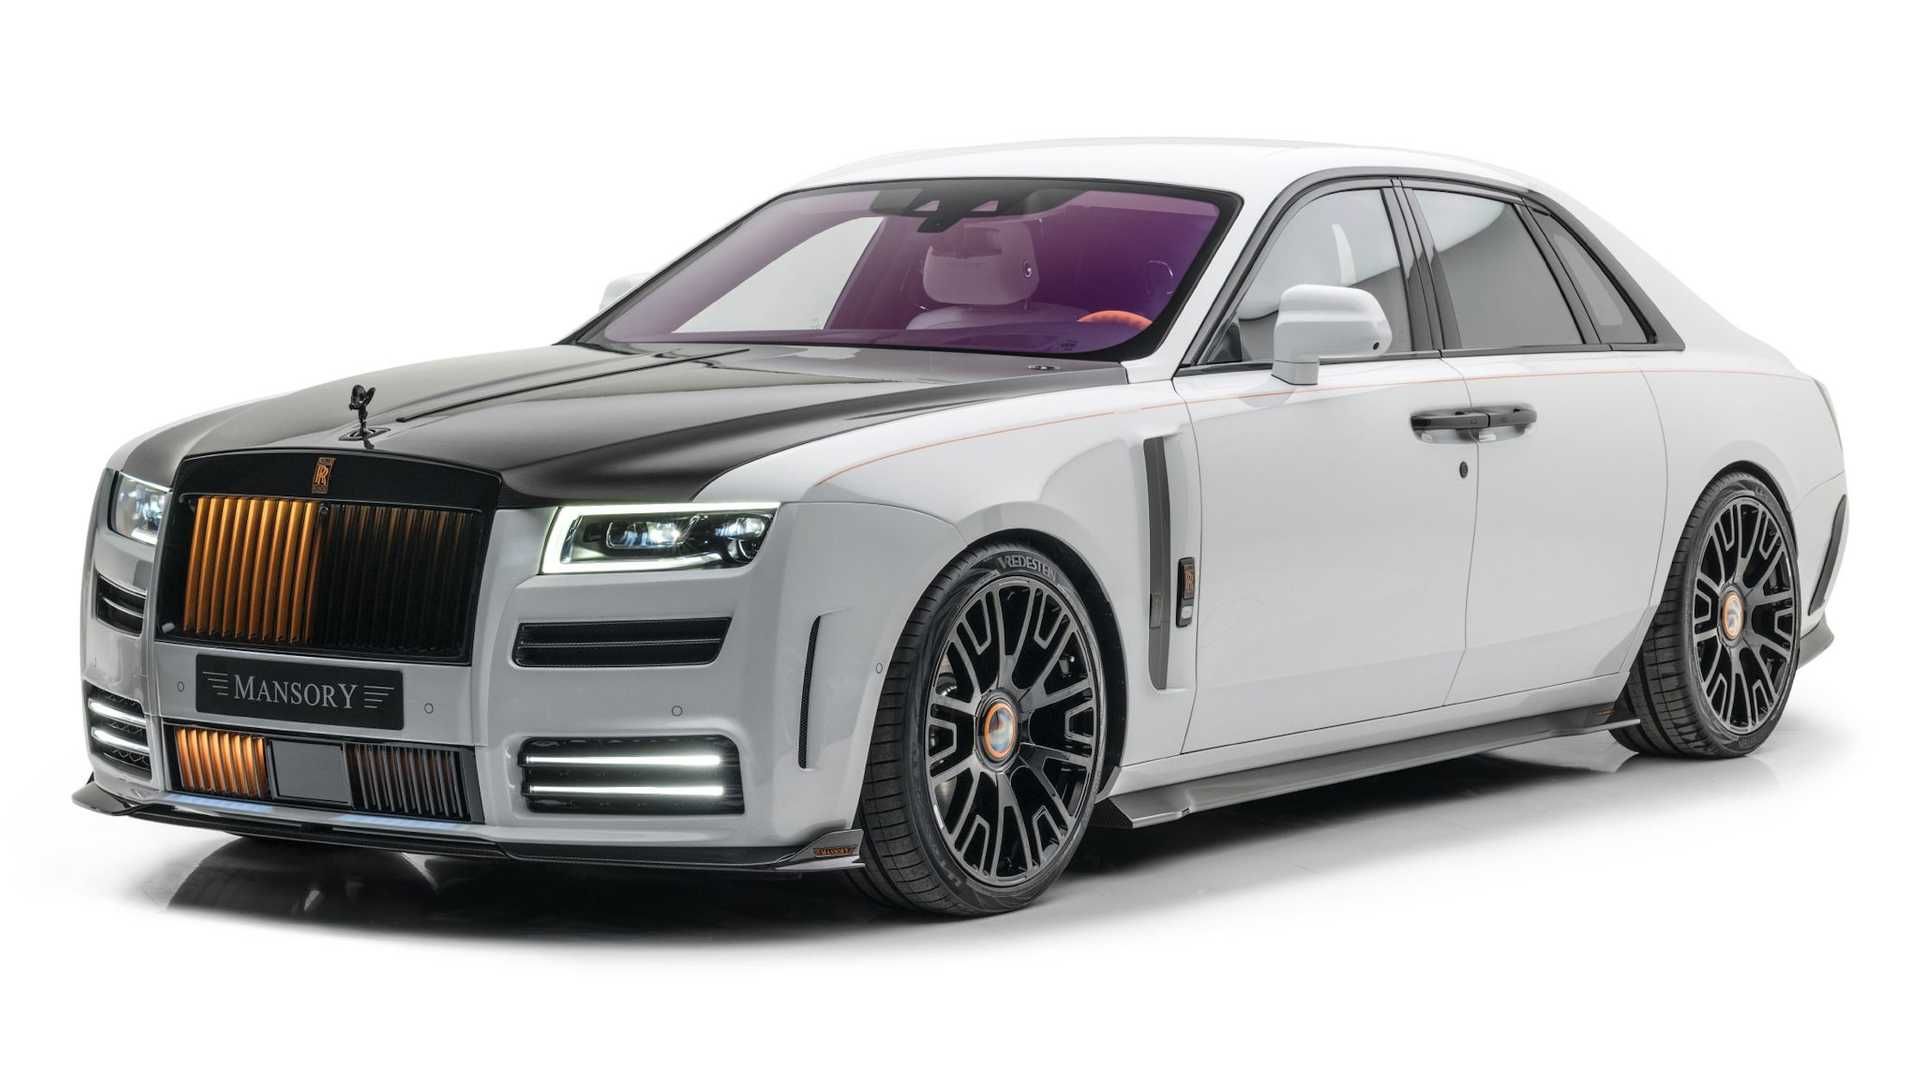 Mansory 替 Rolls-Royce Ghost 準備了不照常規手法的改裝套件